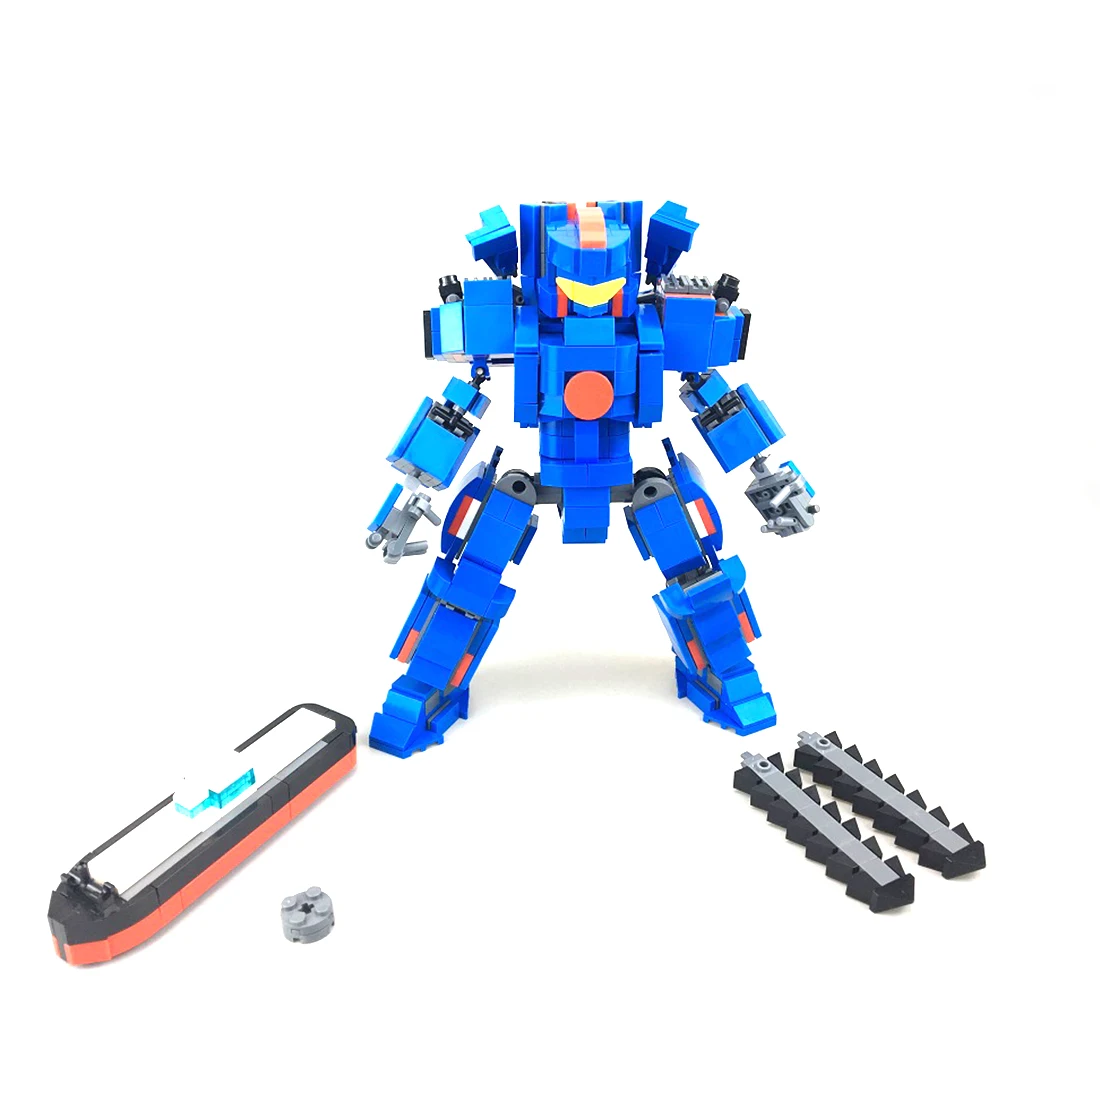 

New 590Pcs Moc Q Version Defender Creative Mecha Model Assembly Small Particle Building Blocks Educational Toy Set - Blue